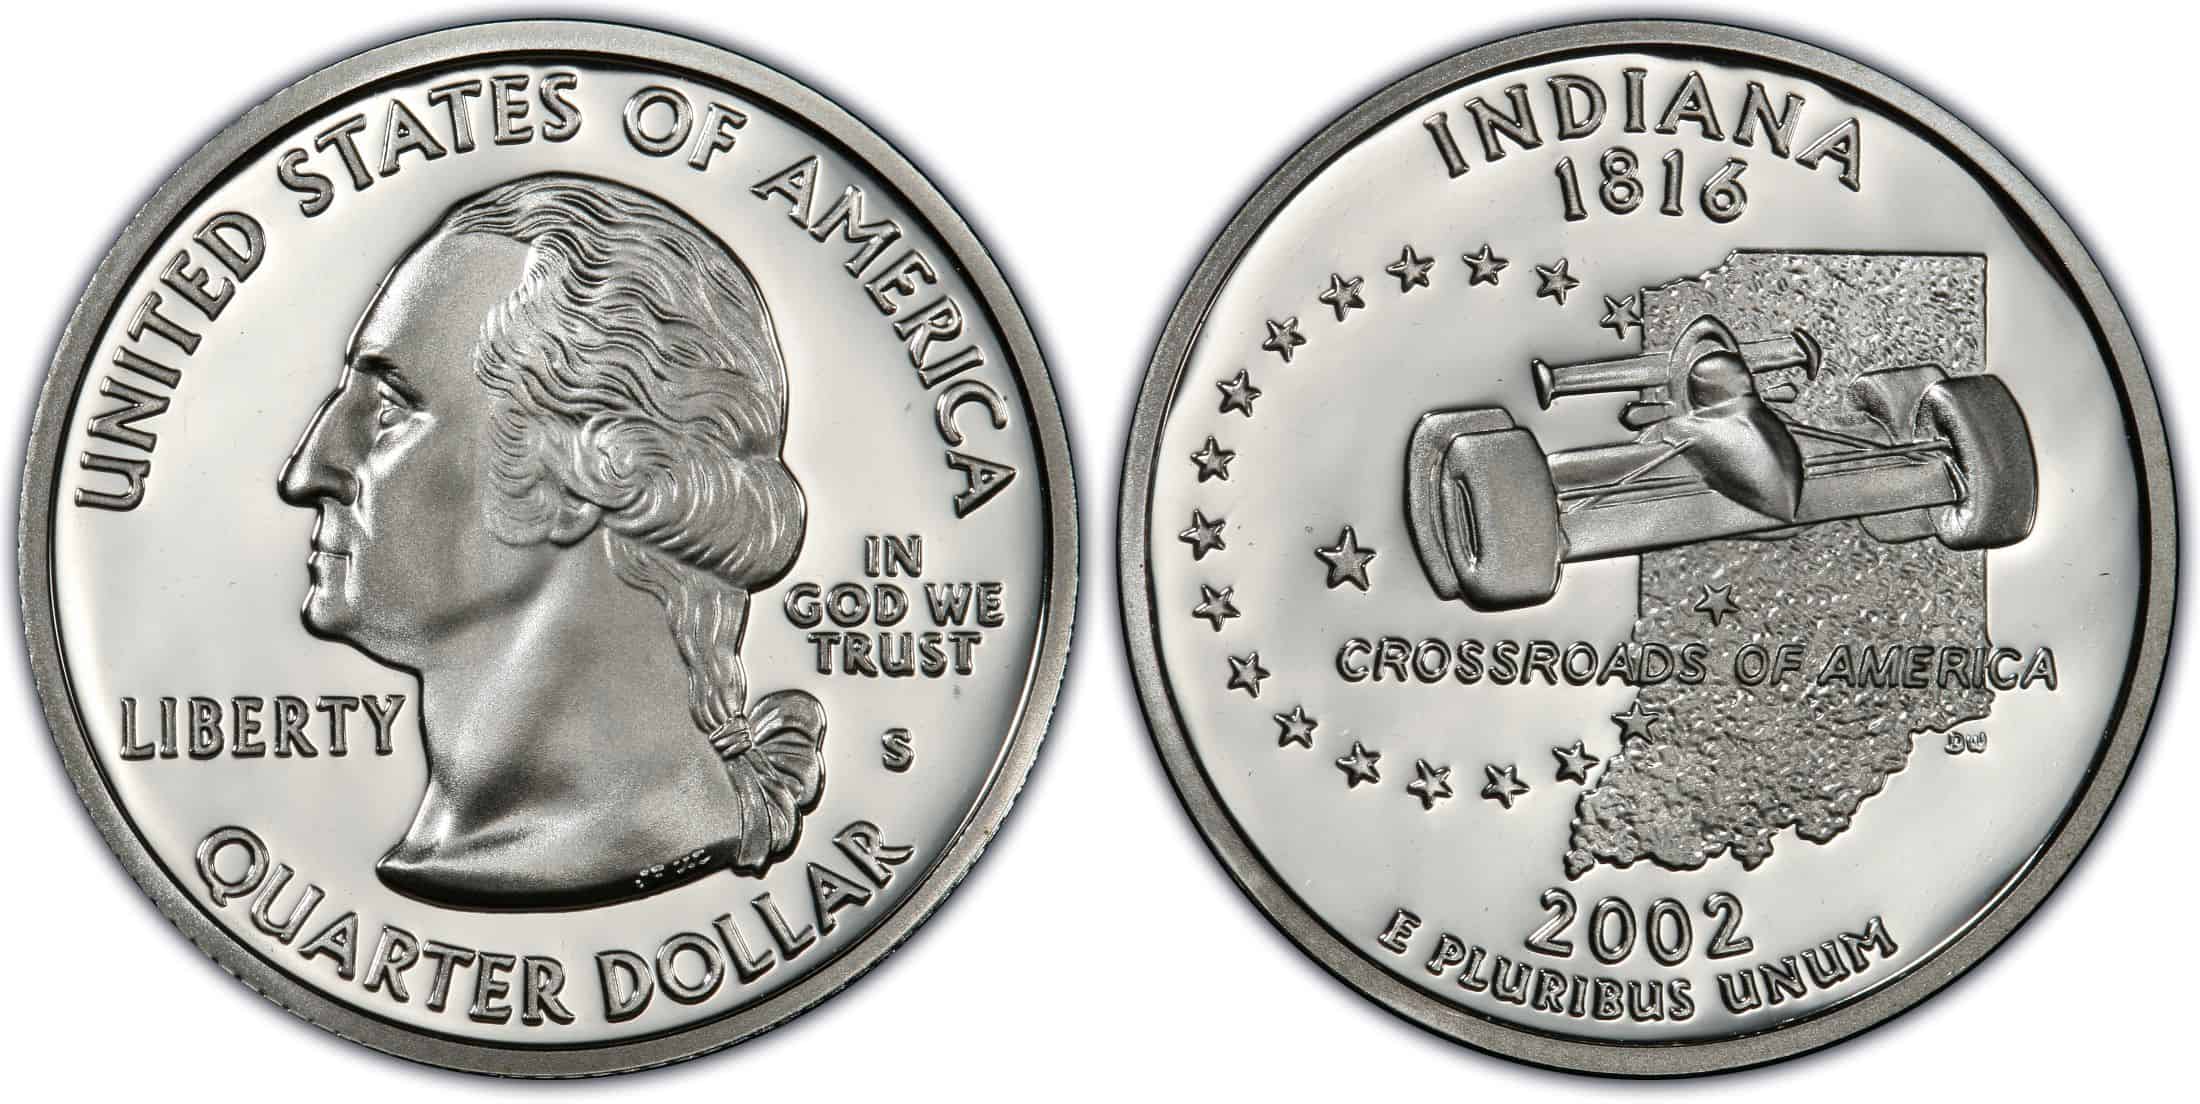 2002 (S) San Francisco Quarter Silver Proof - Indiana